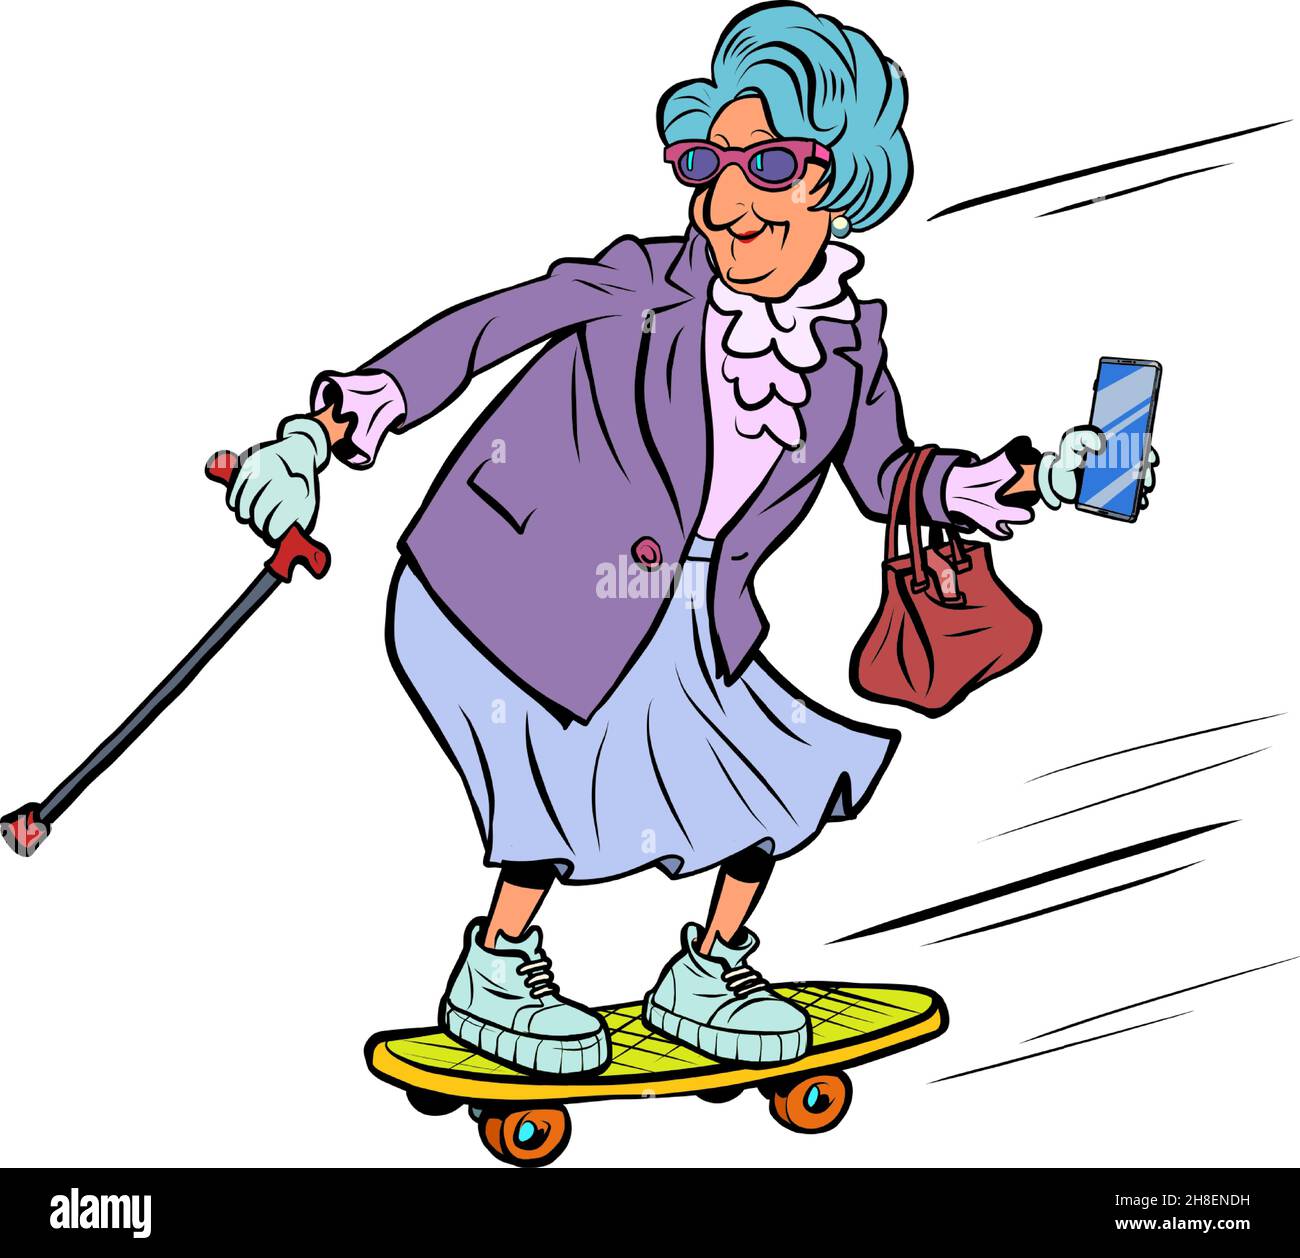 grandma rides a skateboard, active recreation of the elderly. Street sports Stock Vector